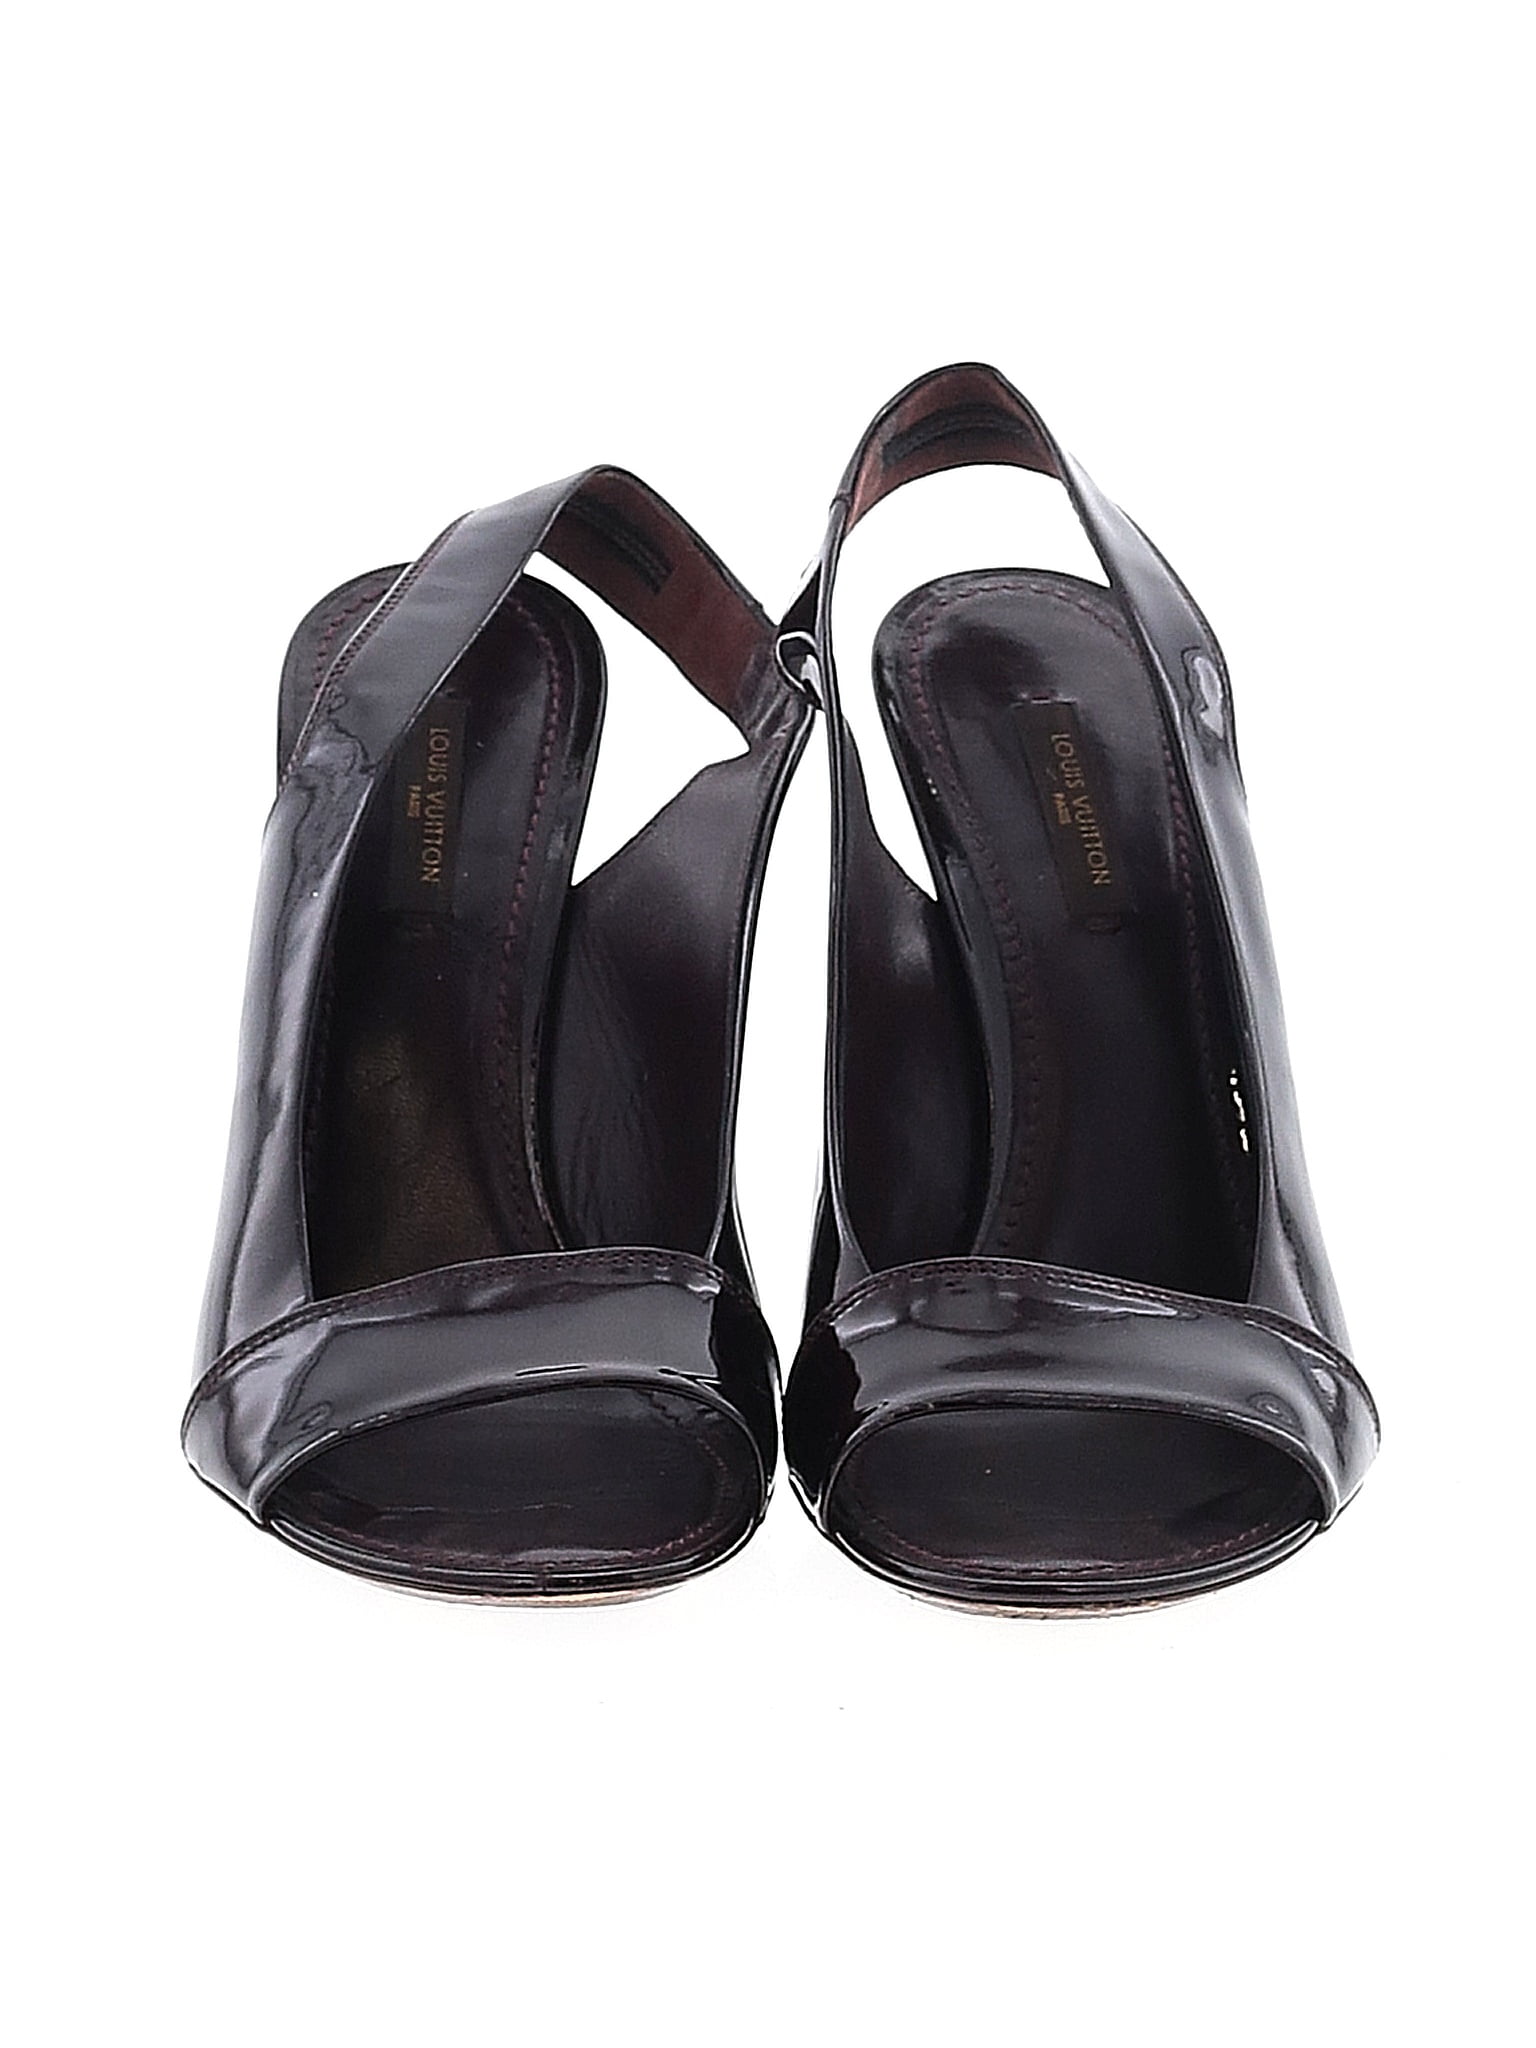 Louis Vuitton Damier Patent Leather Slingback Heels Size 6/36.5